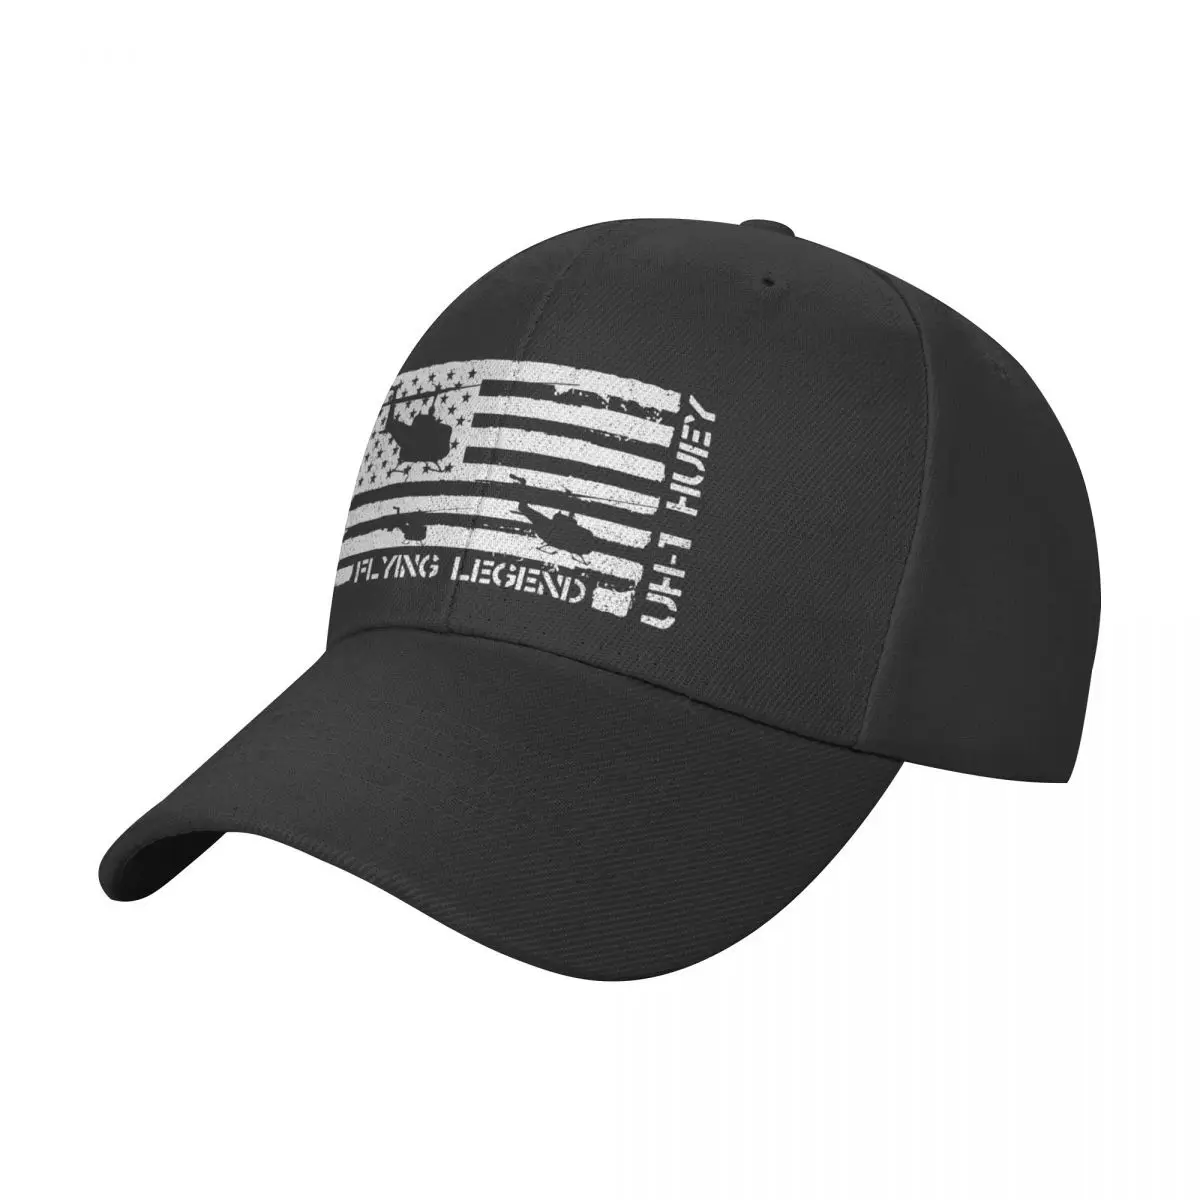 

UH 1 HUEY / FLYING LEGEND Baseball Cap hard hat Military Cap Man Mens Caps Women's